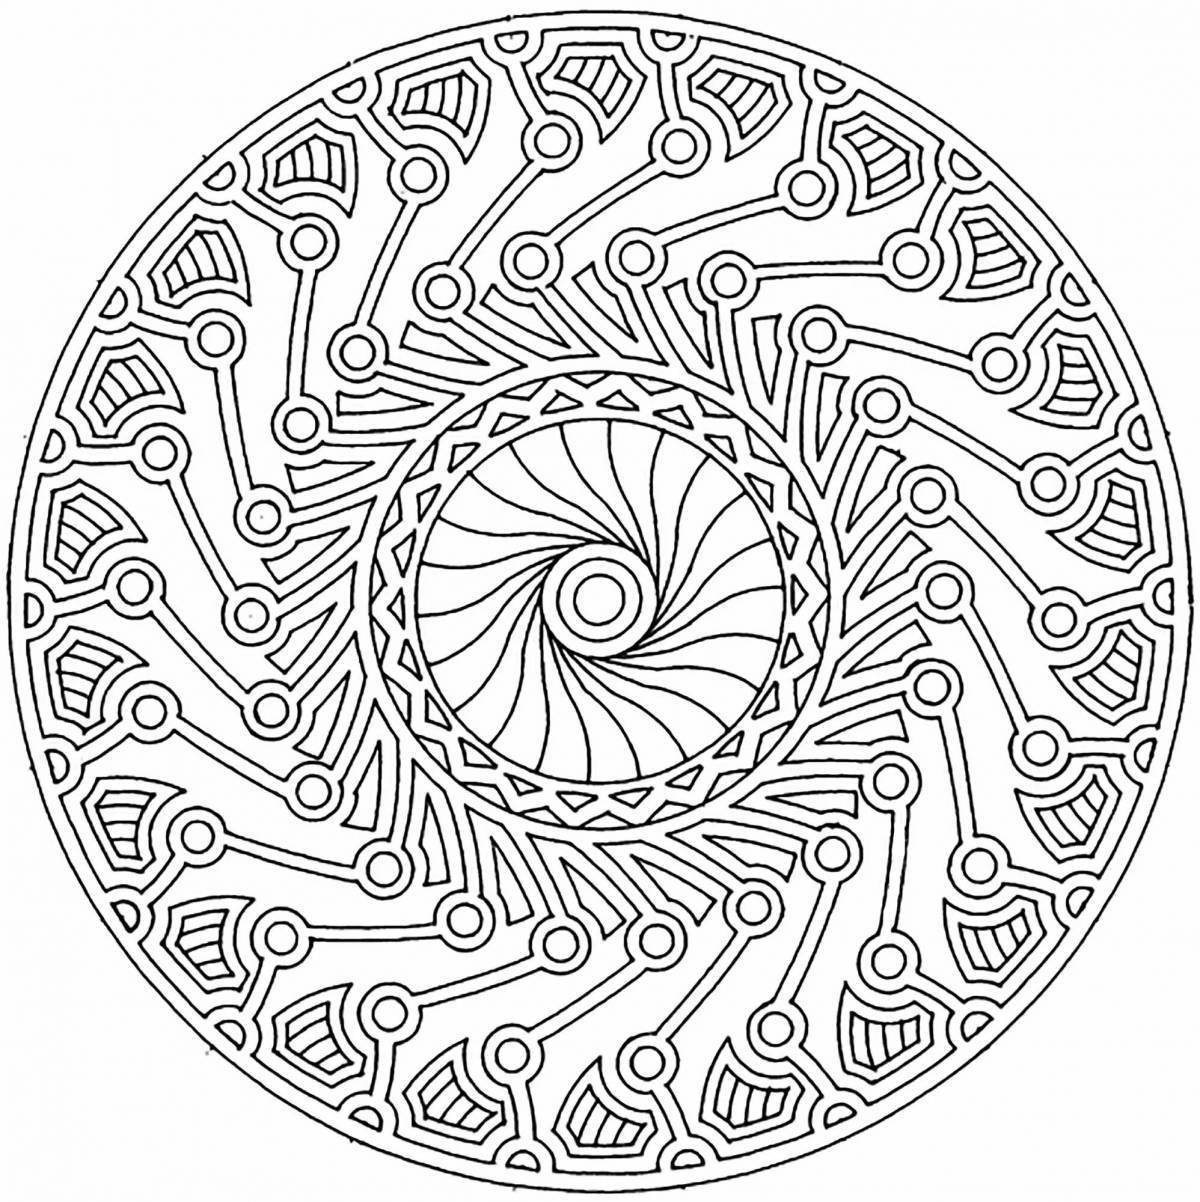 Peaceful anti-stress spiral coloring